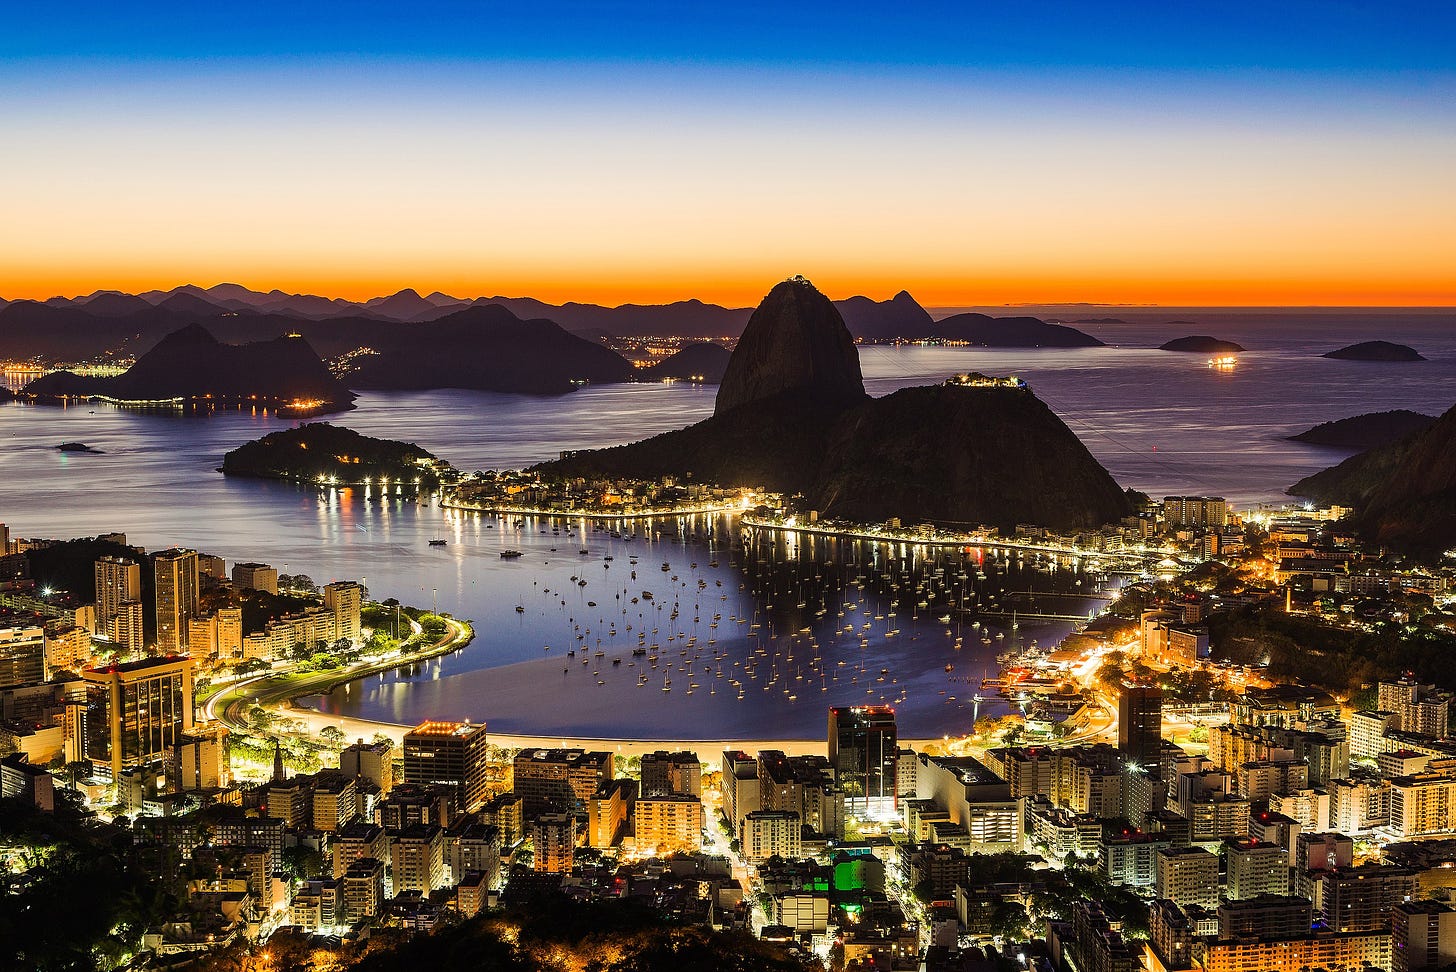 File:Rio de Janeiro City Before Sunrise 1.jpg - Wikimedia Commons